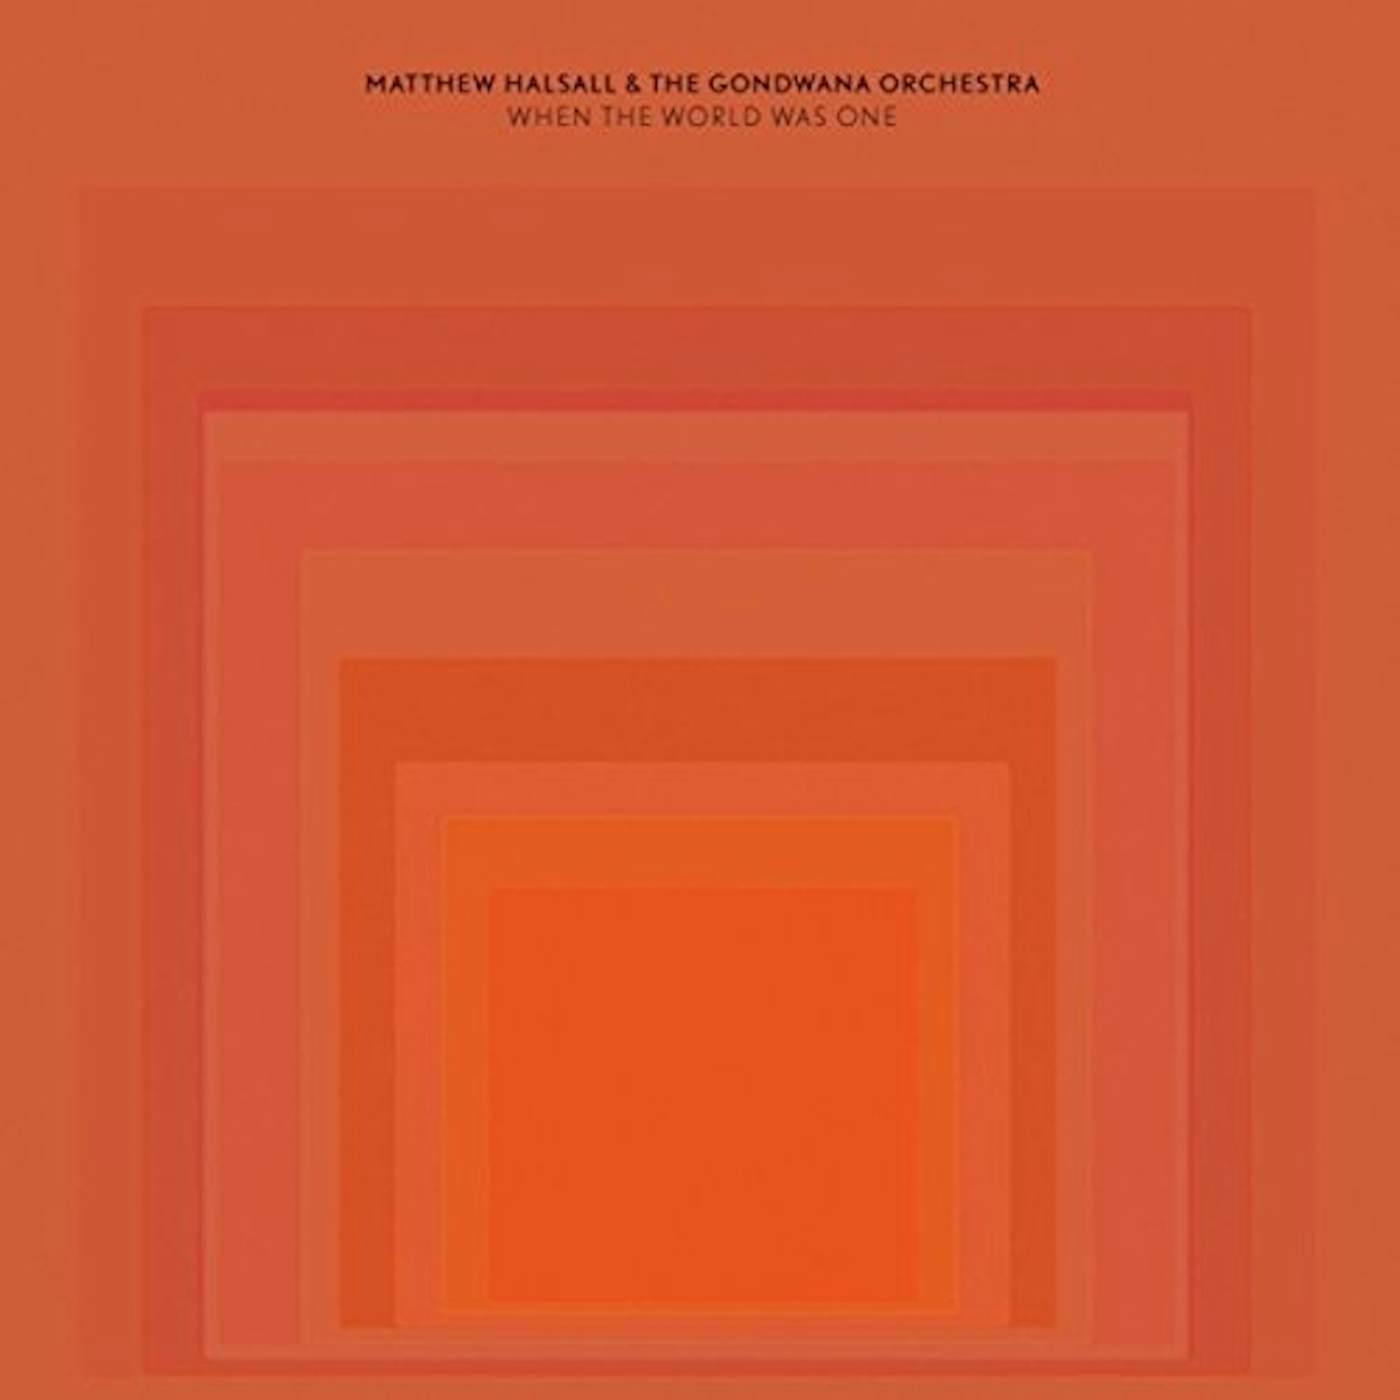 Matthew Halsall & The Gondwana Orchestra When the World Was One Vinyl Record